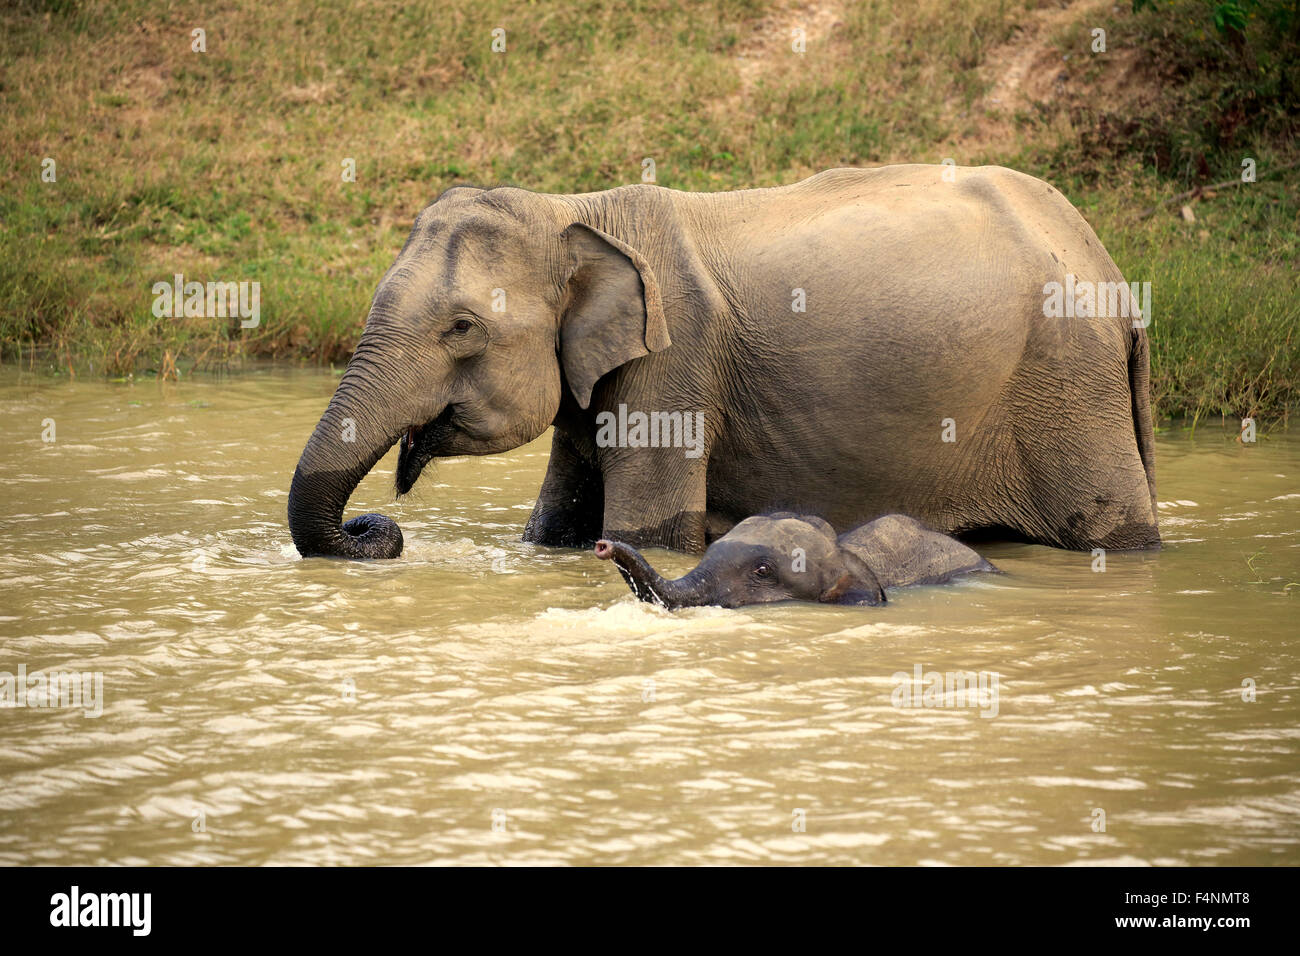 Sri Lankan elephant (Elephas maximus maximus), mother with calf in water, drinking, Yala National Park, Sri Lanka Stock Photo